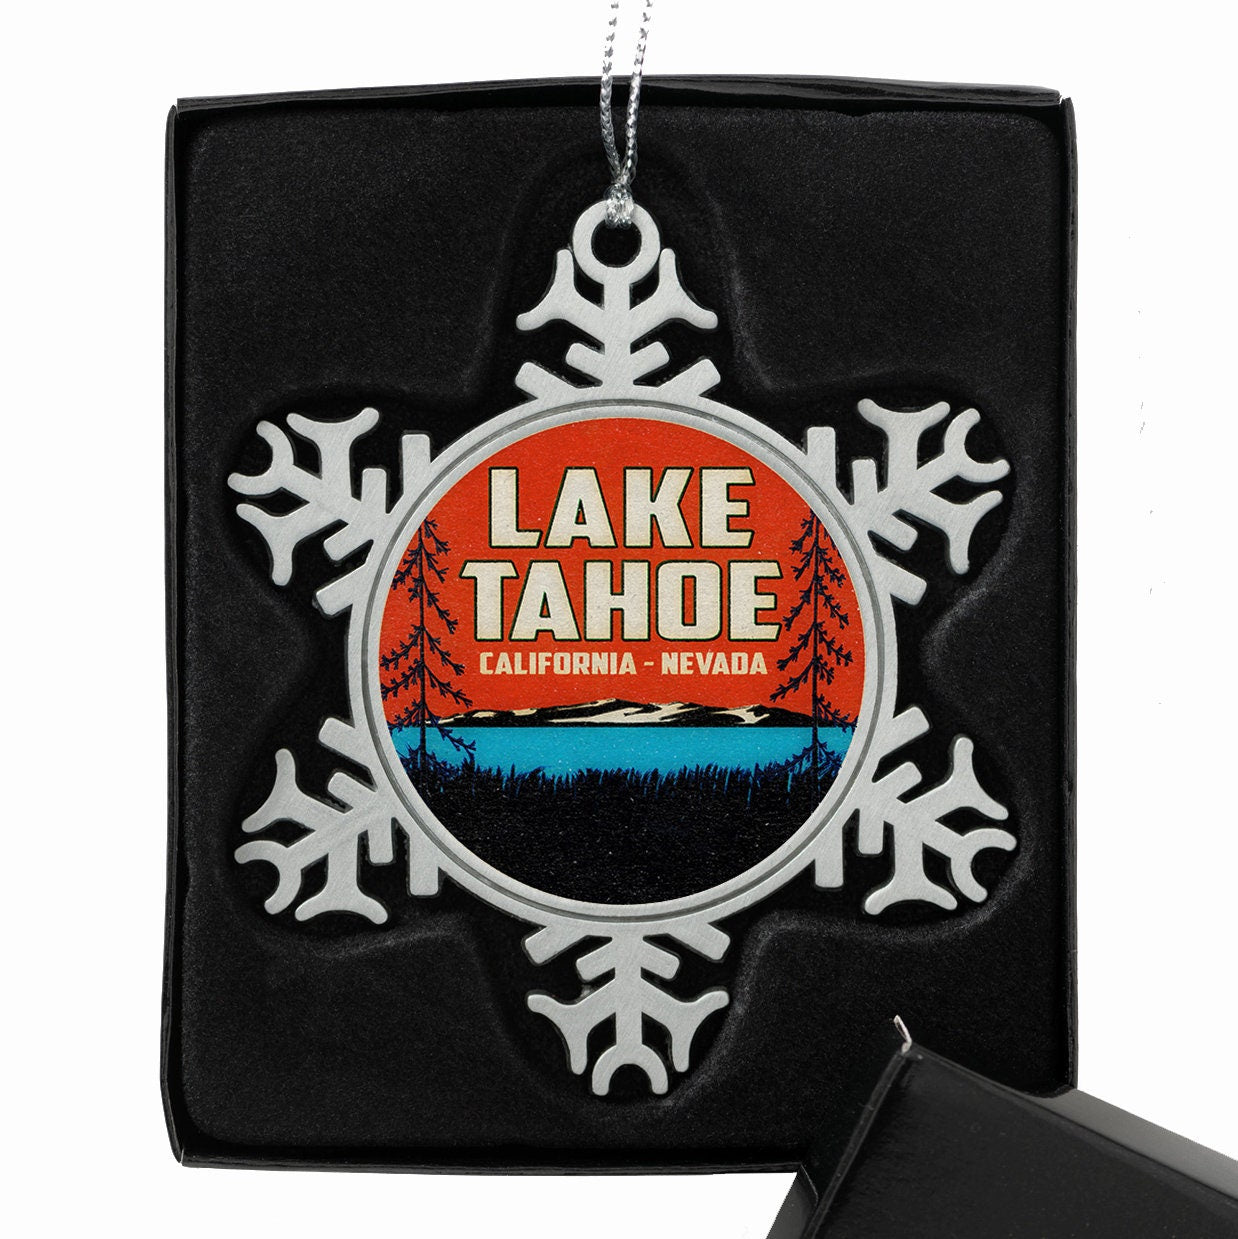 Pewter Finish Christmas Ornament Lake Tahoe Skiing 3" Ski California Nevada